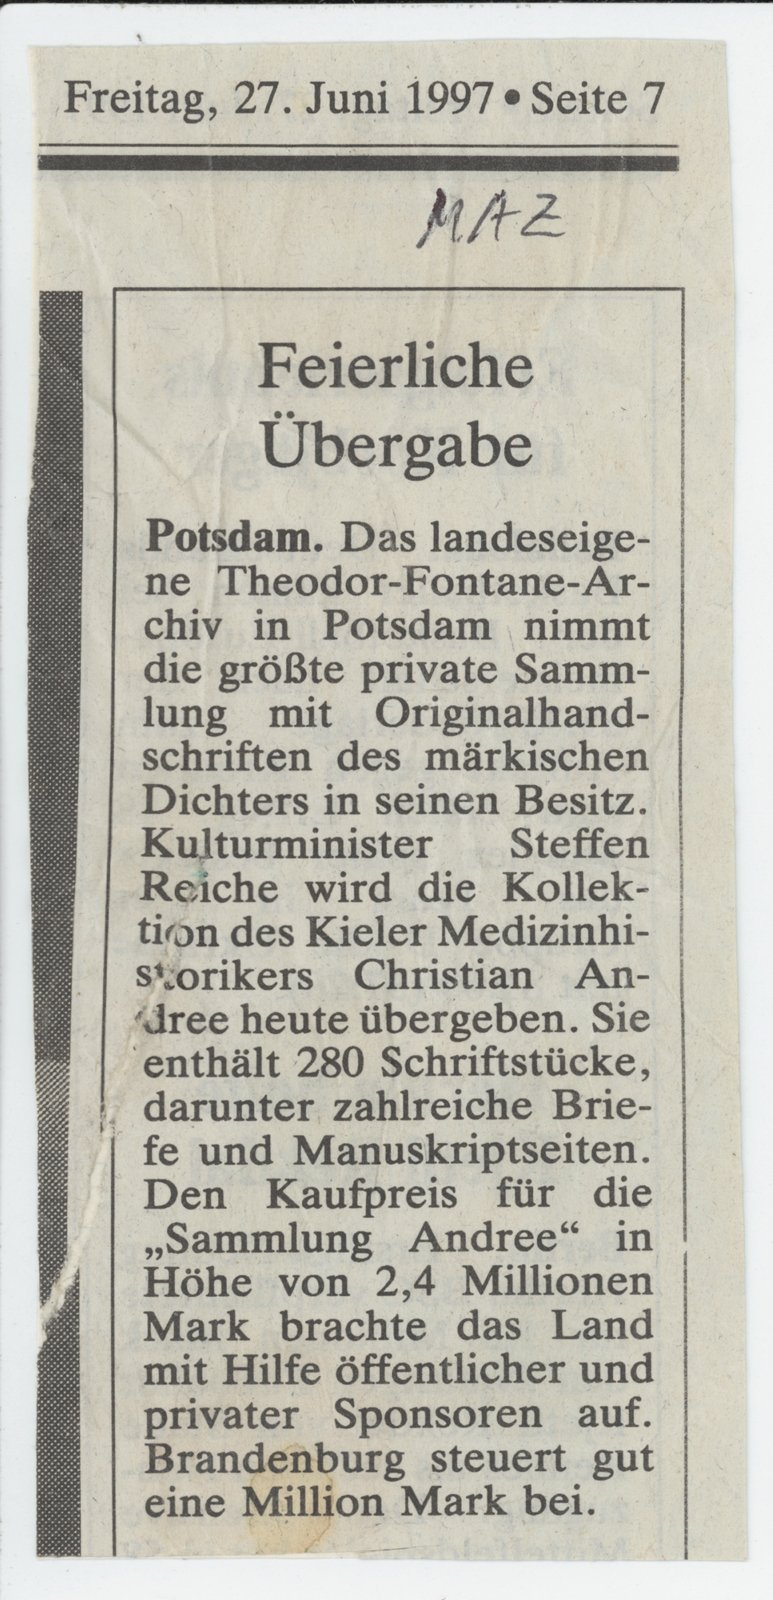 Fontanearchiv, 27.06.1997 (Heimatverein "Alter Krug" Zossen e.V. CC BY-NC-SA)